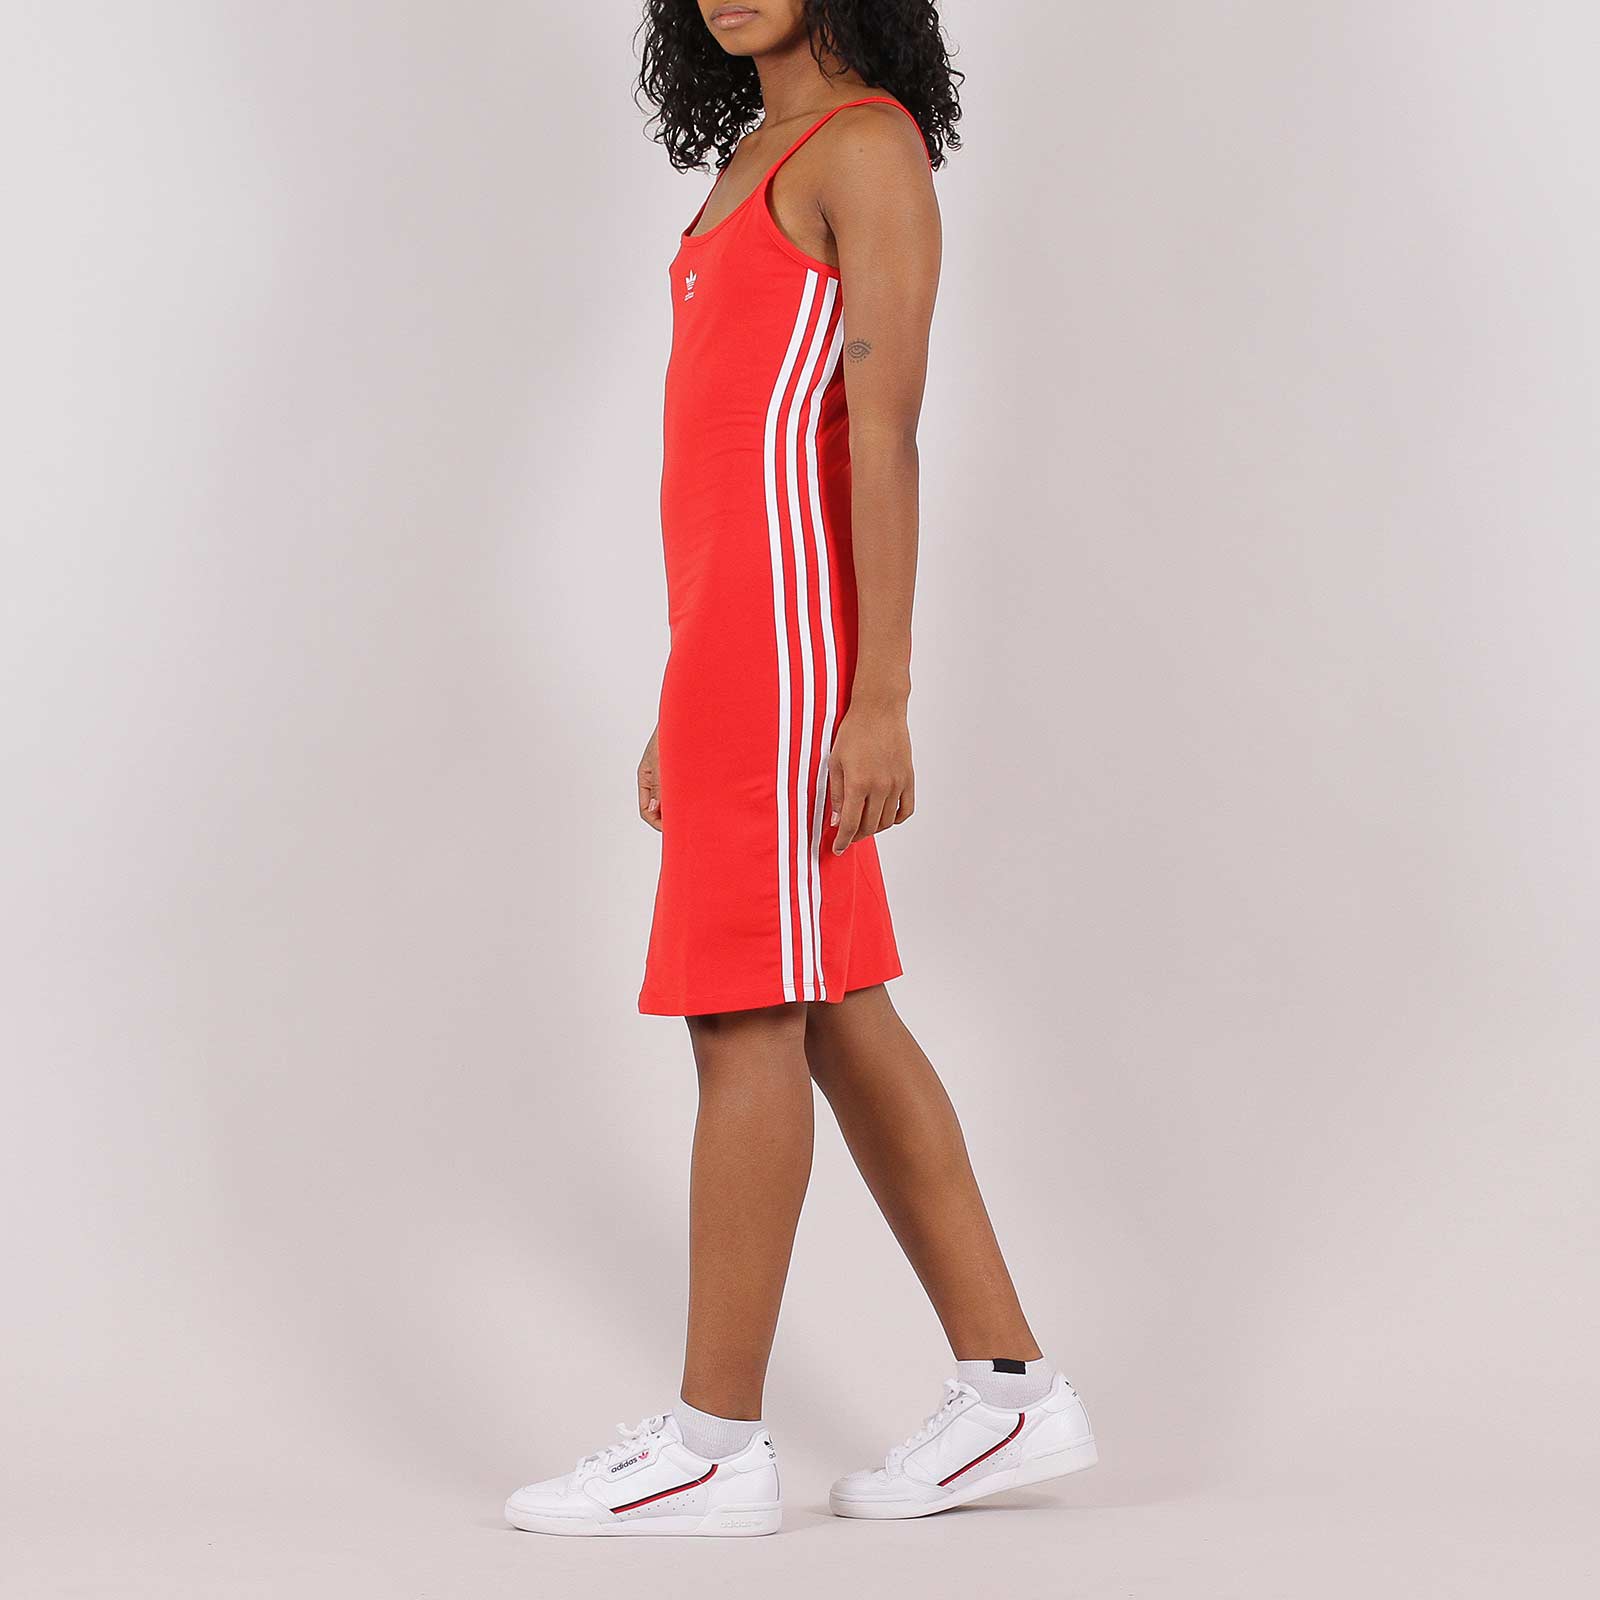 Adidas Originals Womens Tank Dress Red 